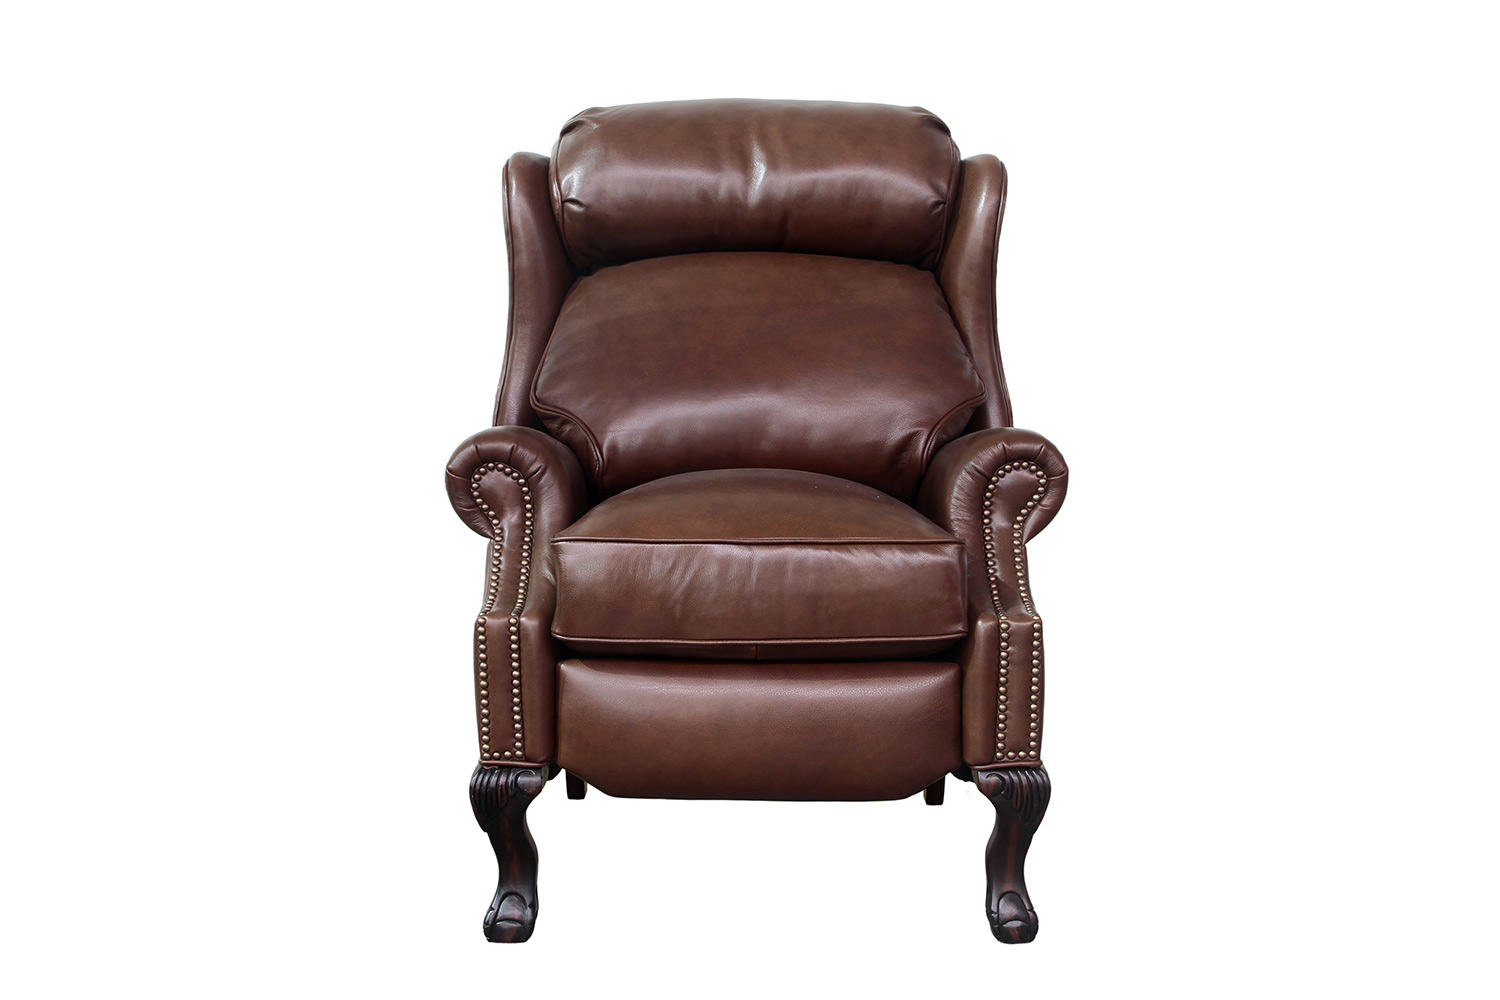 Barcalounger Danbury Recliner Chair - Shoreham Chocolate/All Leather